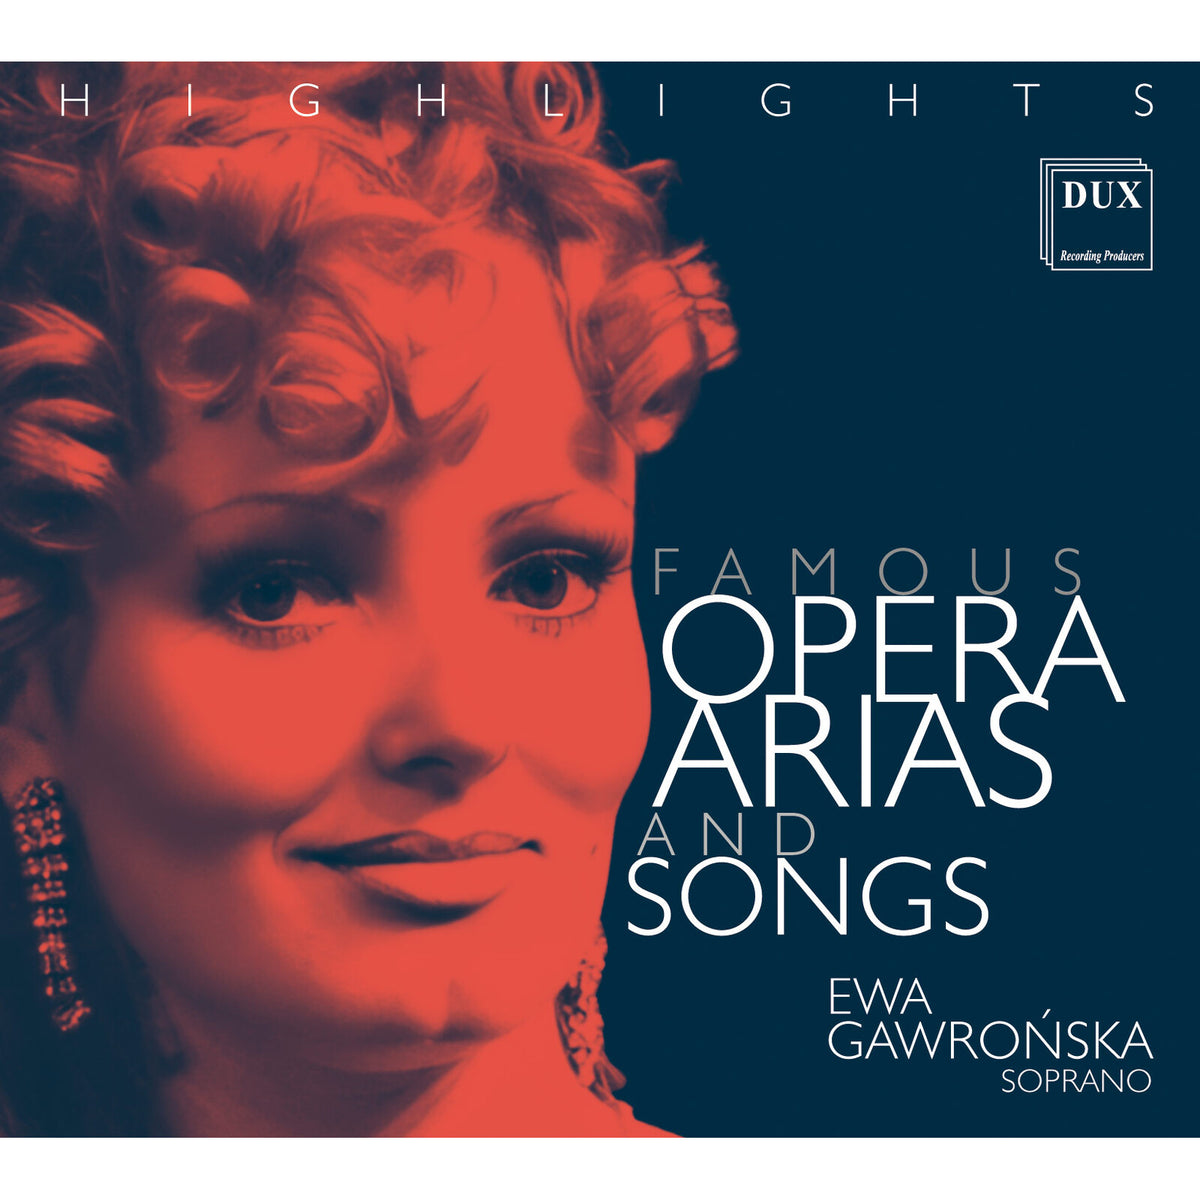 Ewa Gawronska (soprano), Various Artists - Famous Opera Arias and Songs - DUX1997